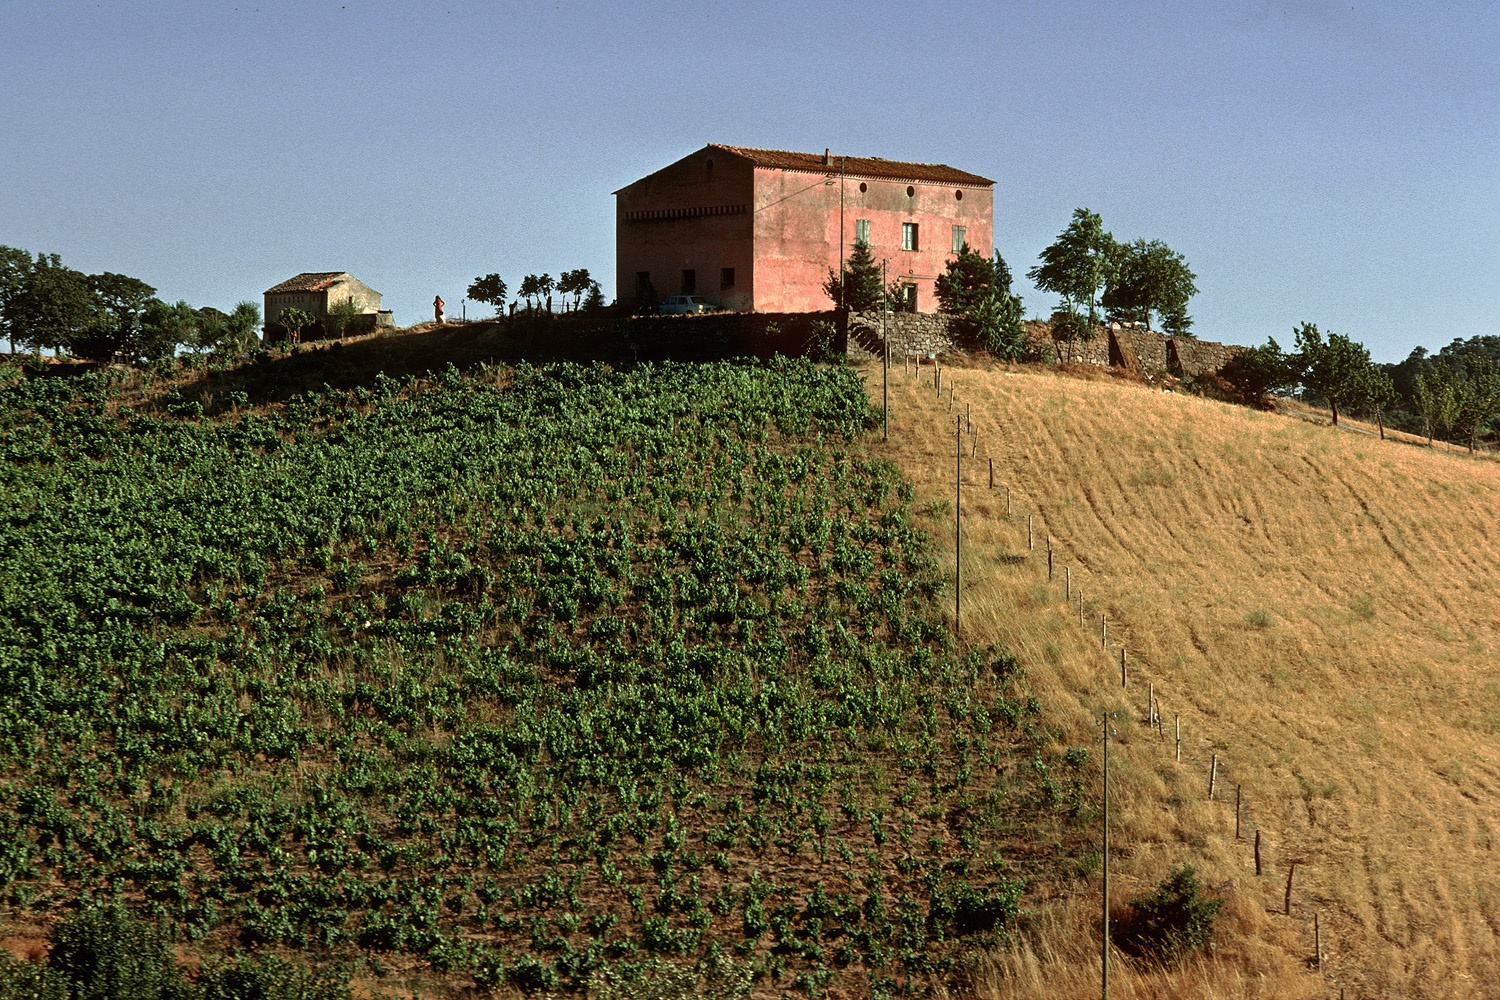 bill-hocker-farm-near-nÃºoro-sardinia-1984